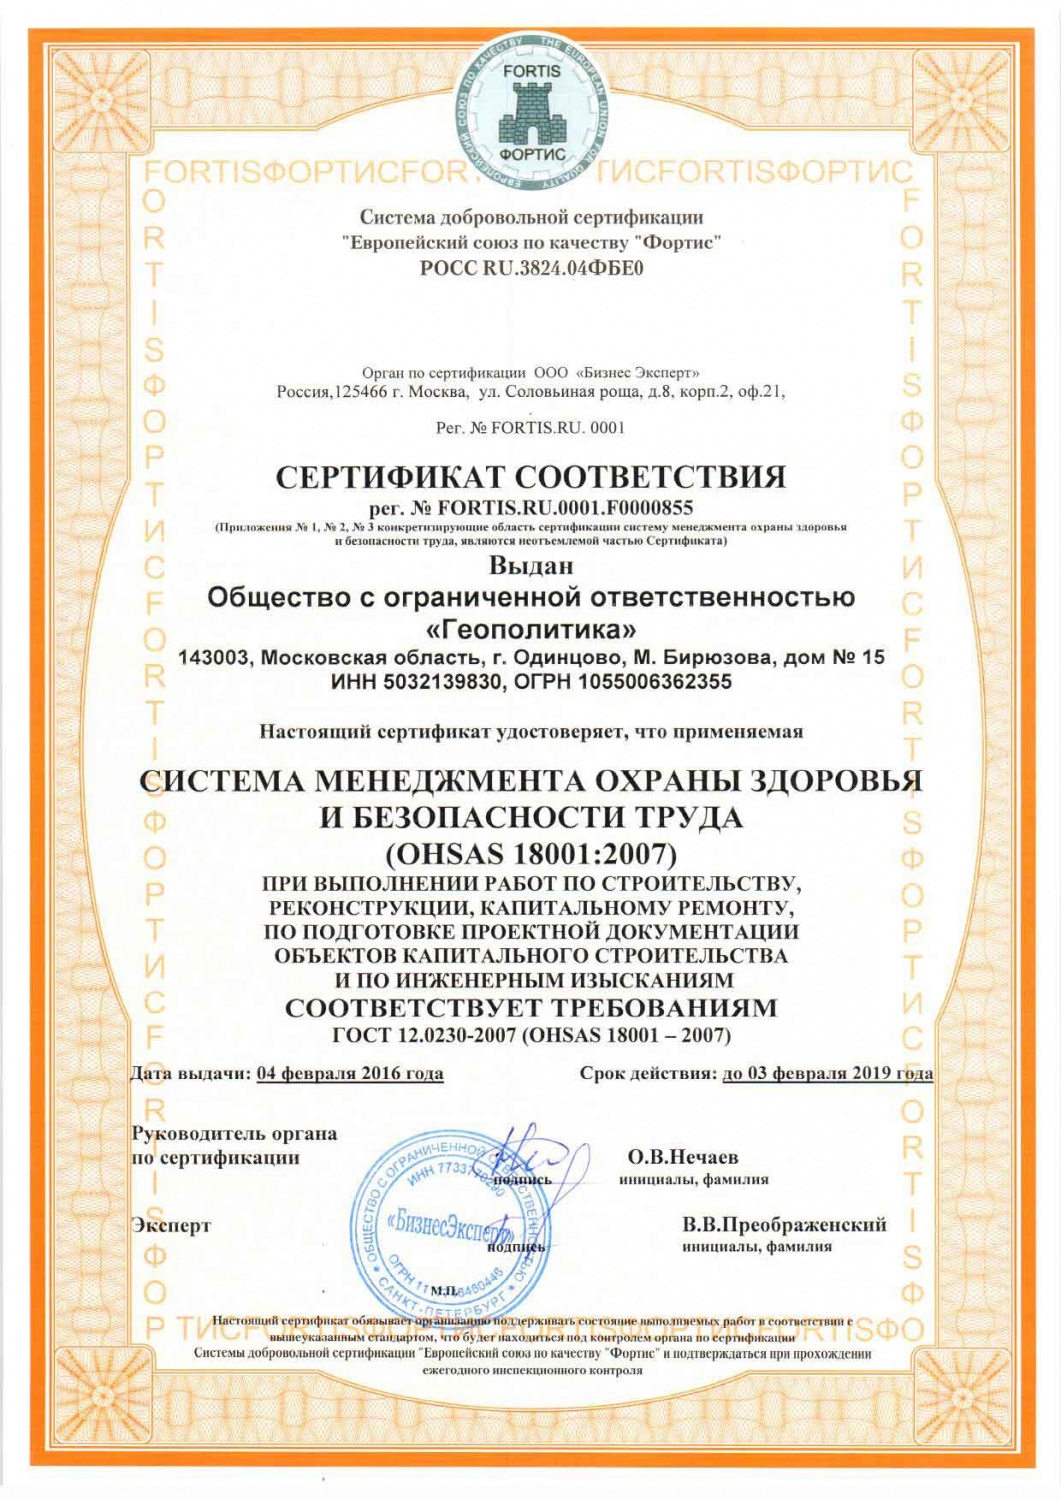 Сертификат ГОСТ 12.0230-2007 (OHSAS 18001:2007)